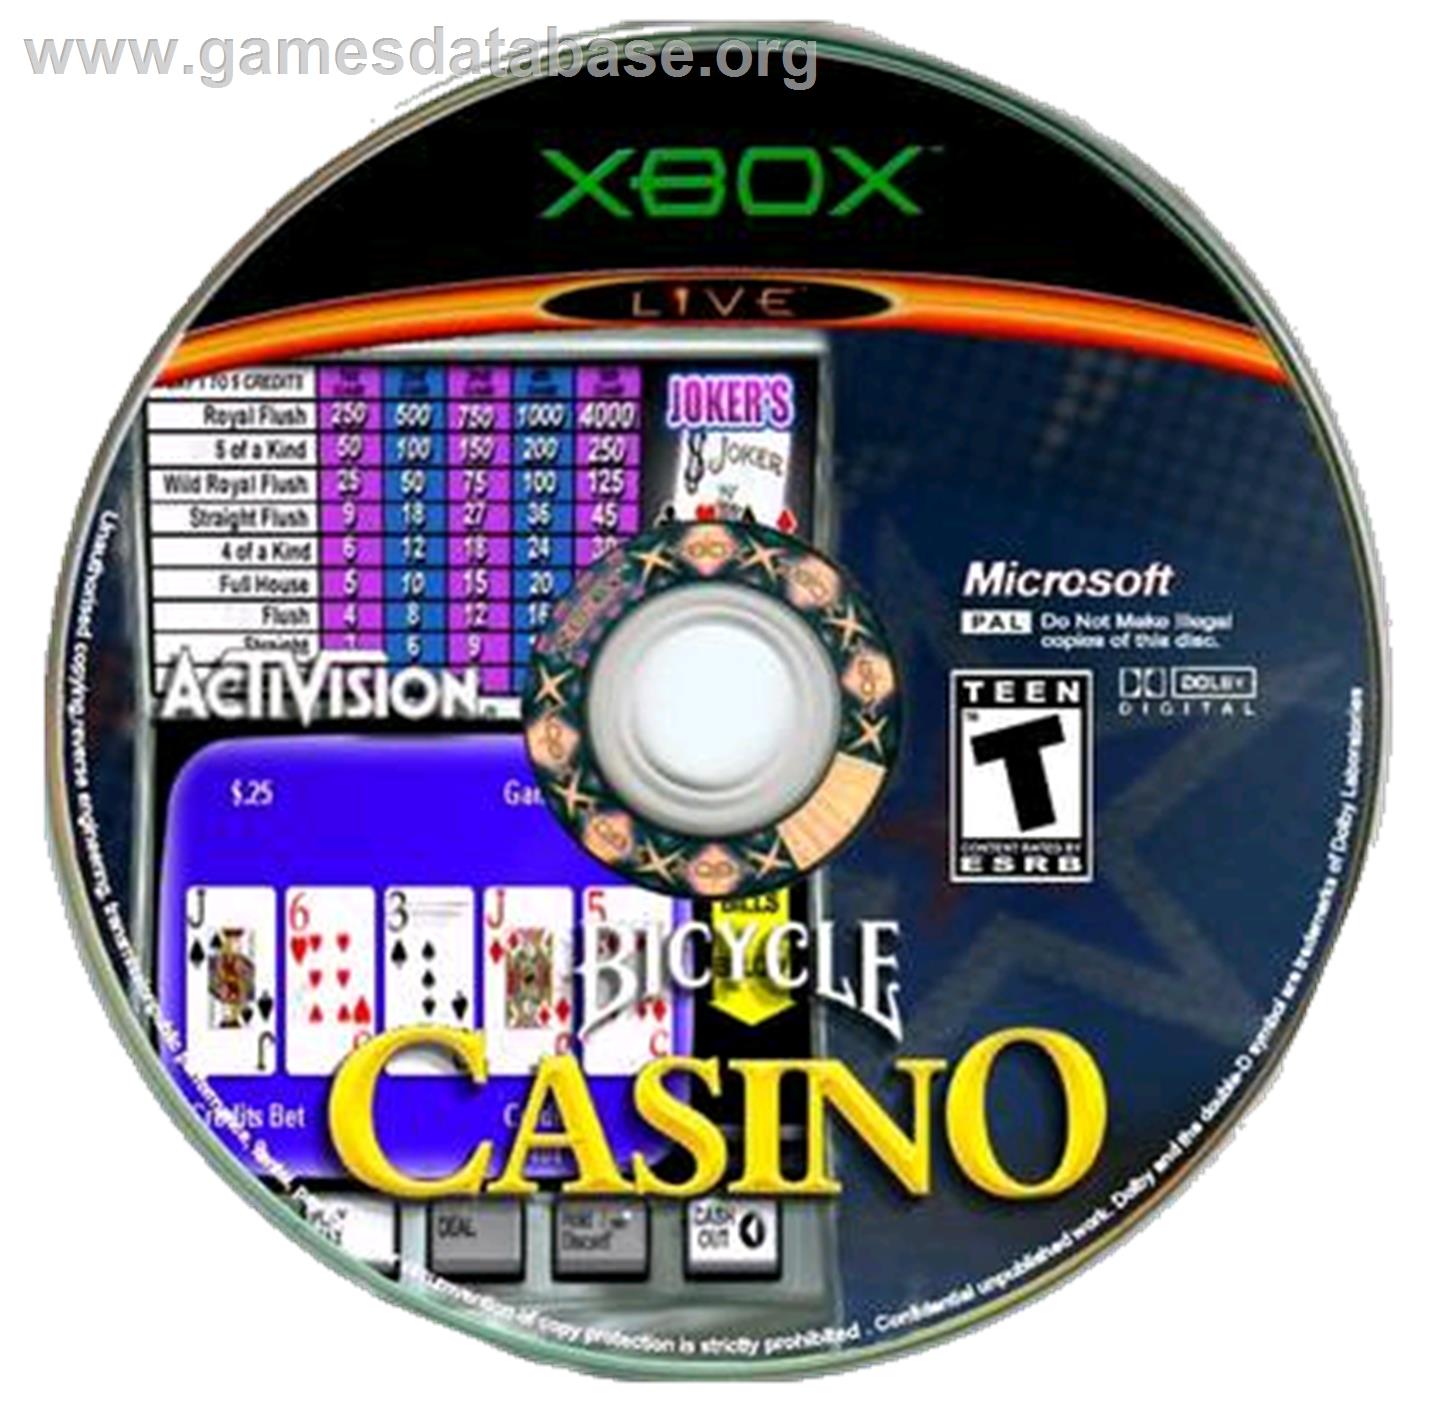 Bicycle Casino - Microsoft Xbox - Artwork - CD